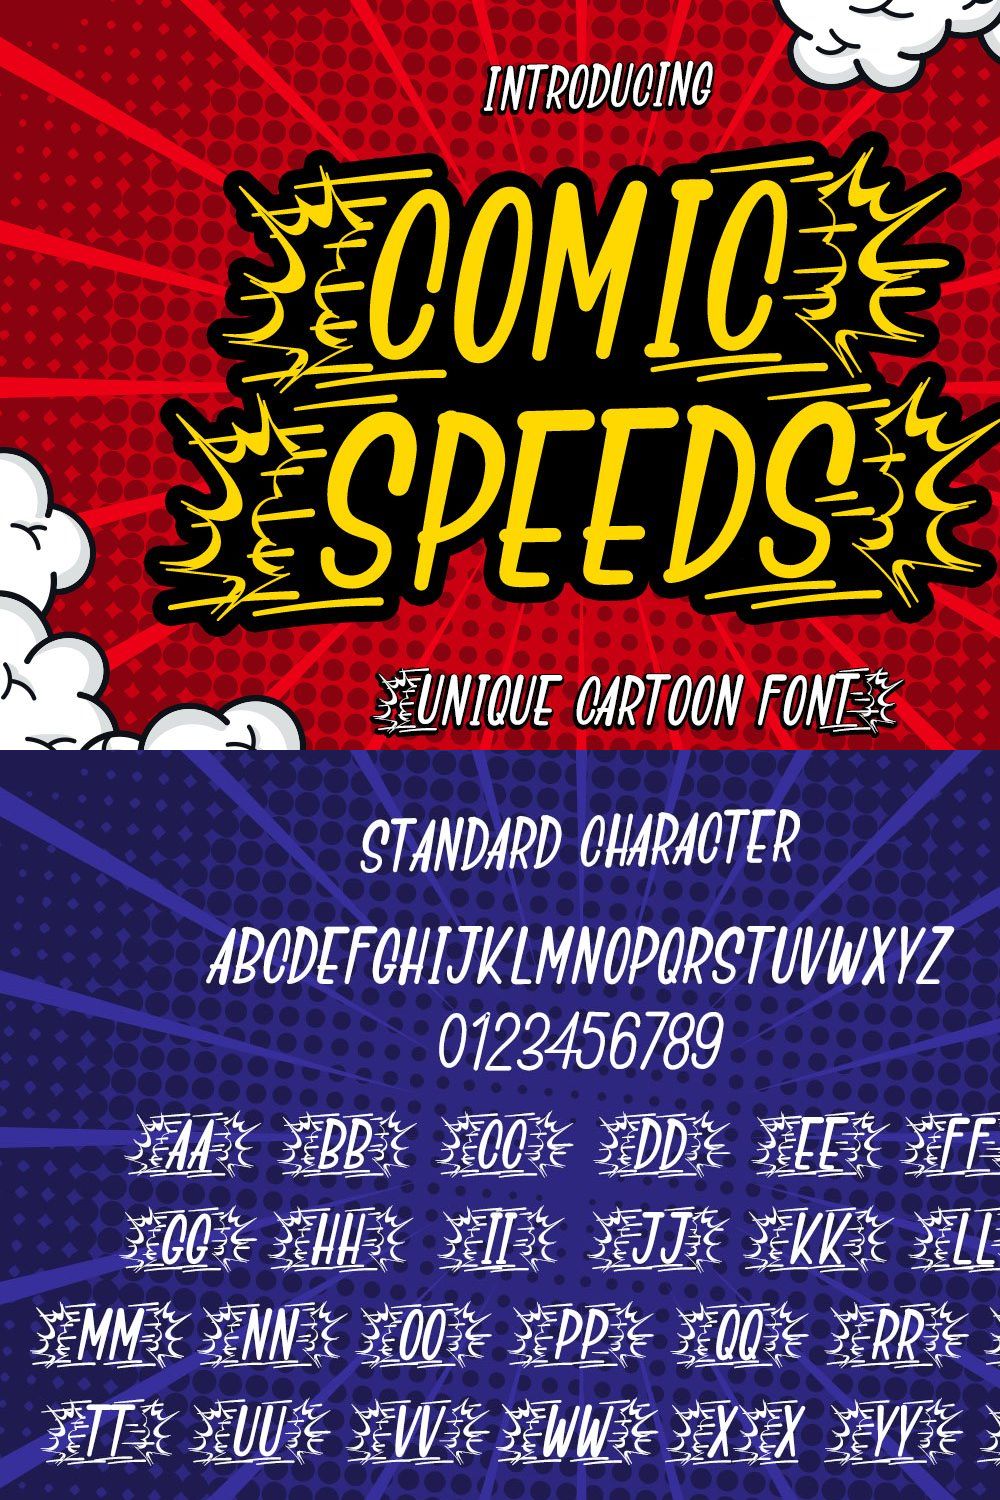 Comic Speeds - Cartoon Font pinterest preview image.